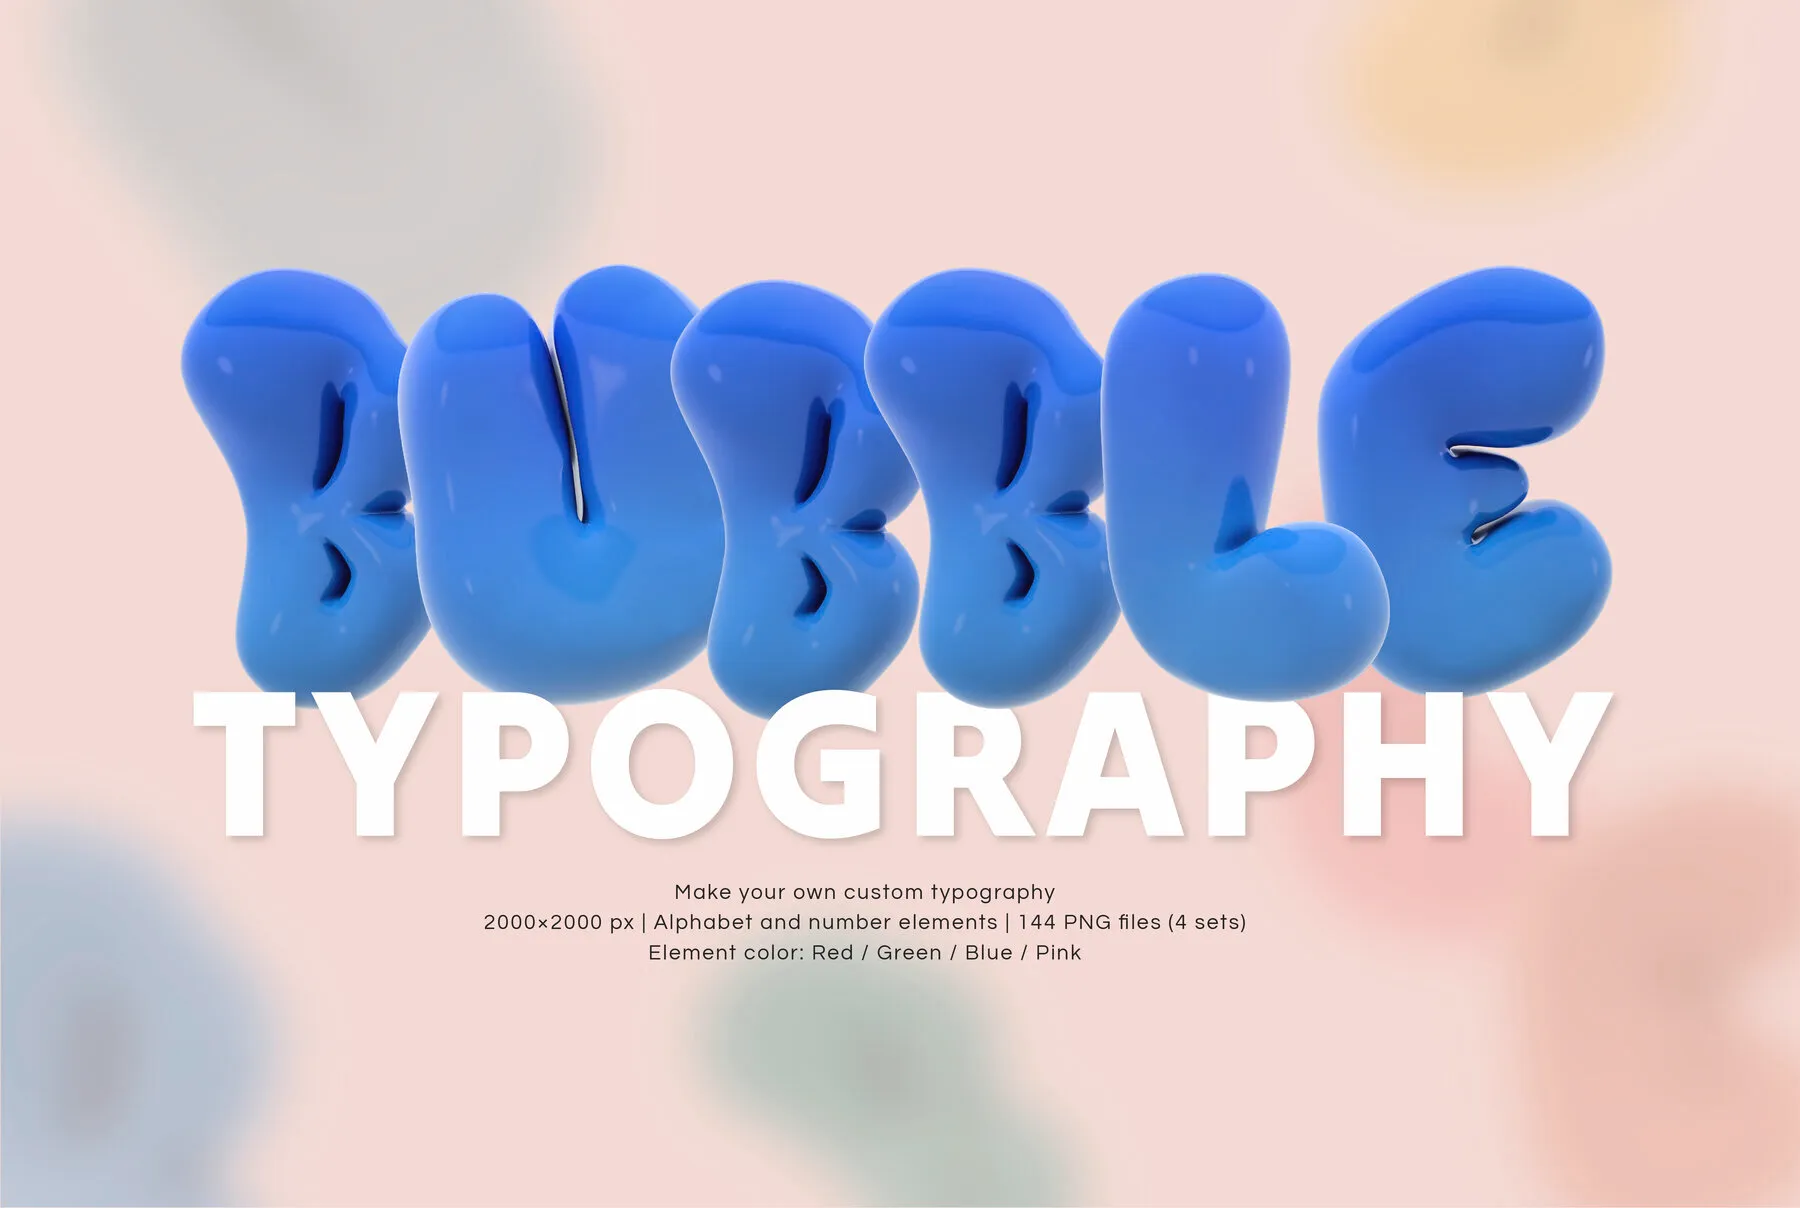 Bubble typography elements